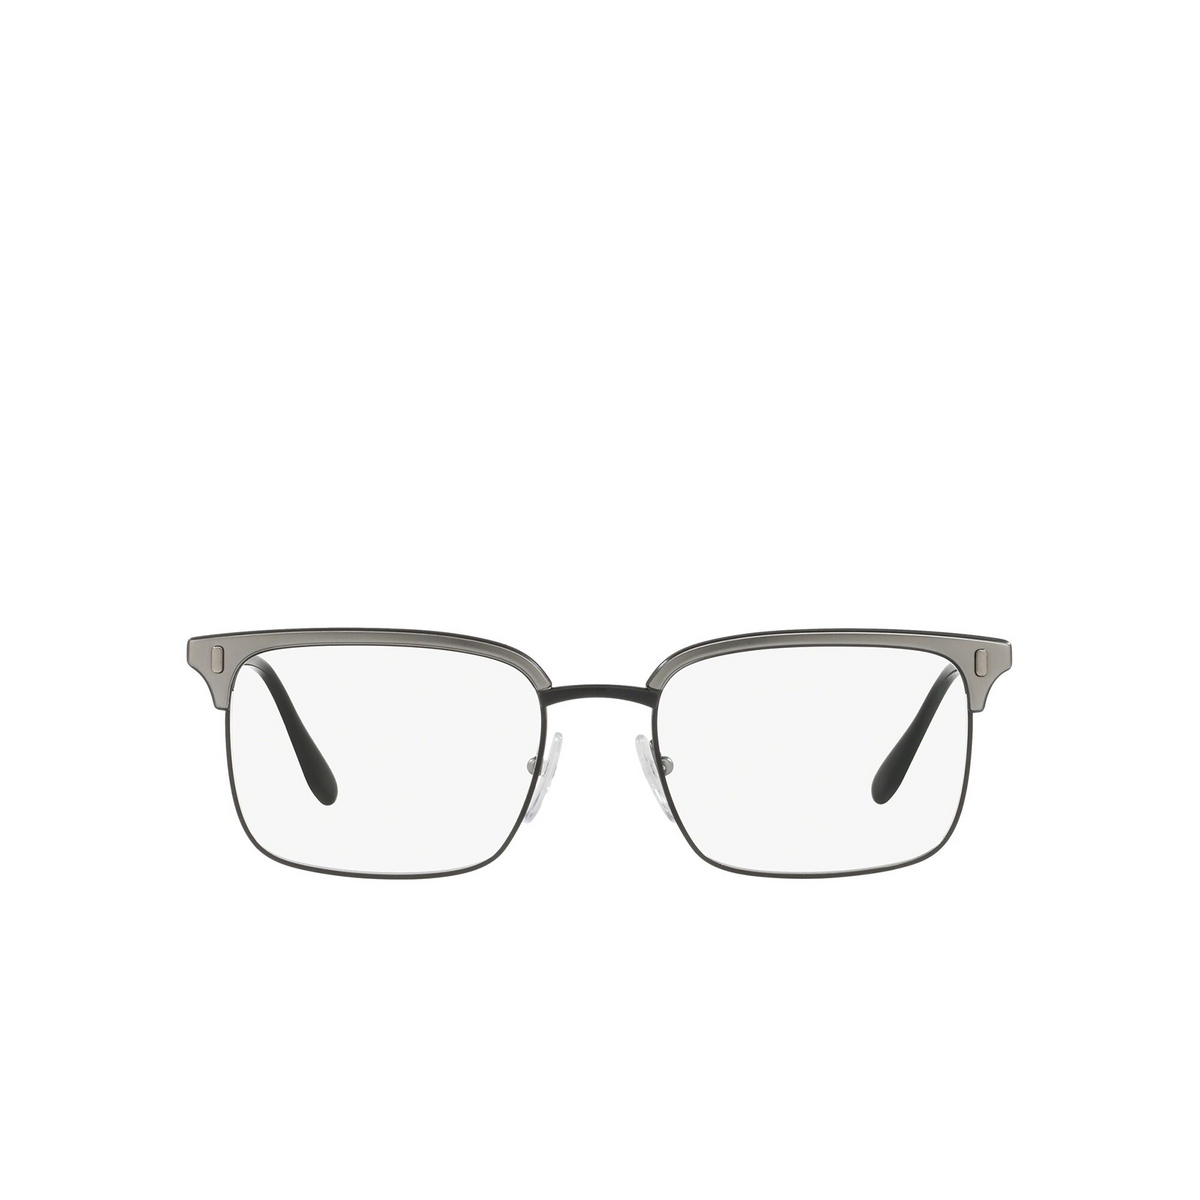 Prada® Rectangle Eyeglasses: Conceptual PR 55VV color Black / Matte Gunmetal 2781O1 - front view.